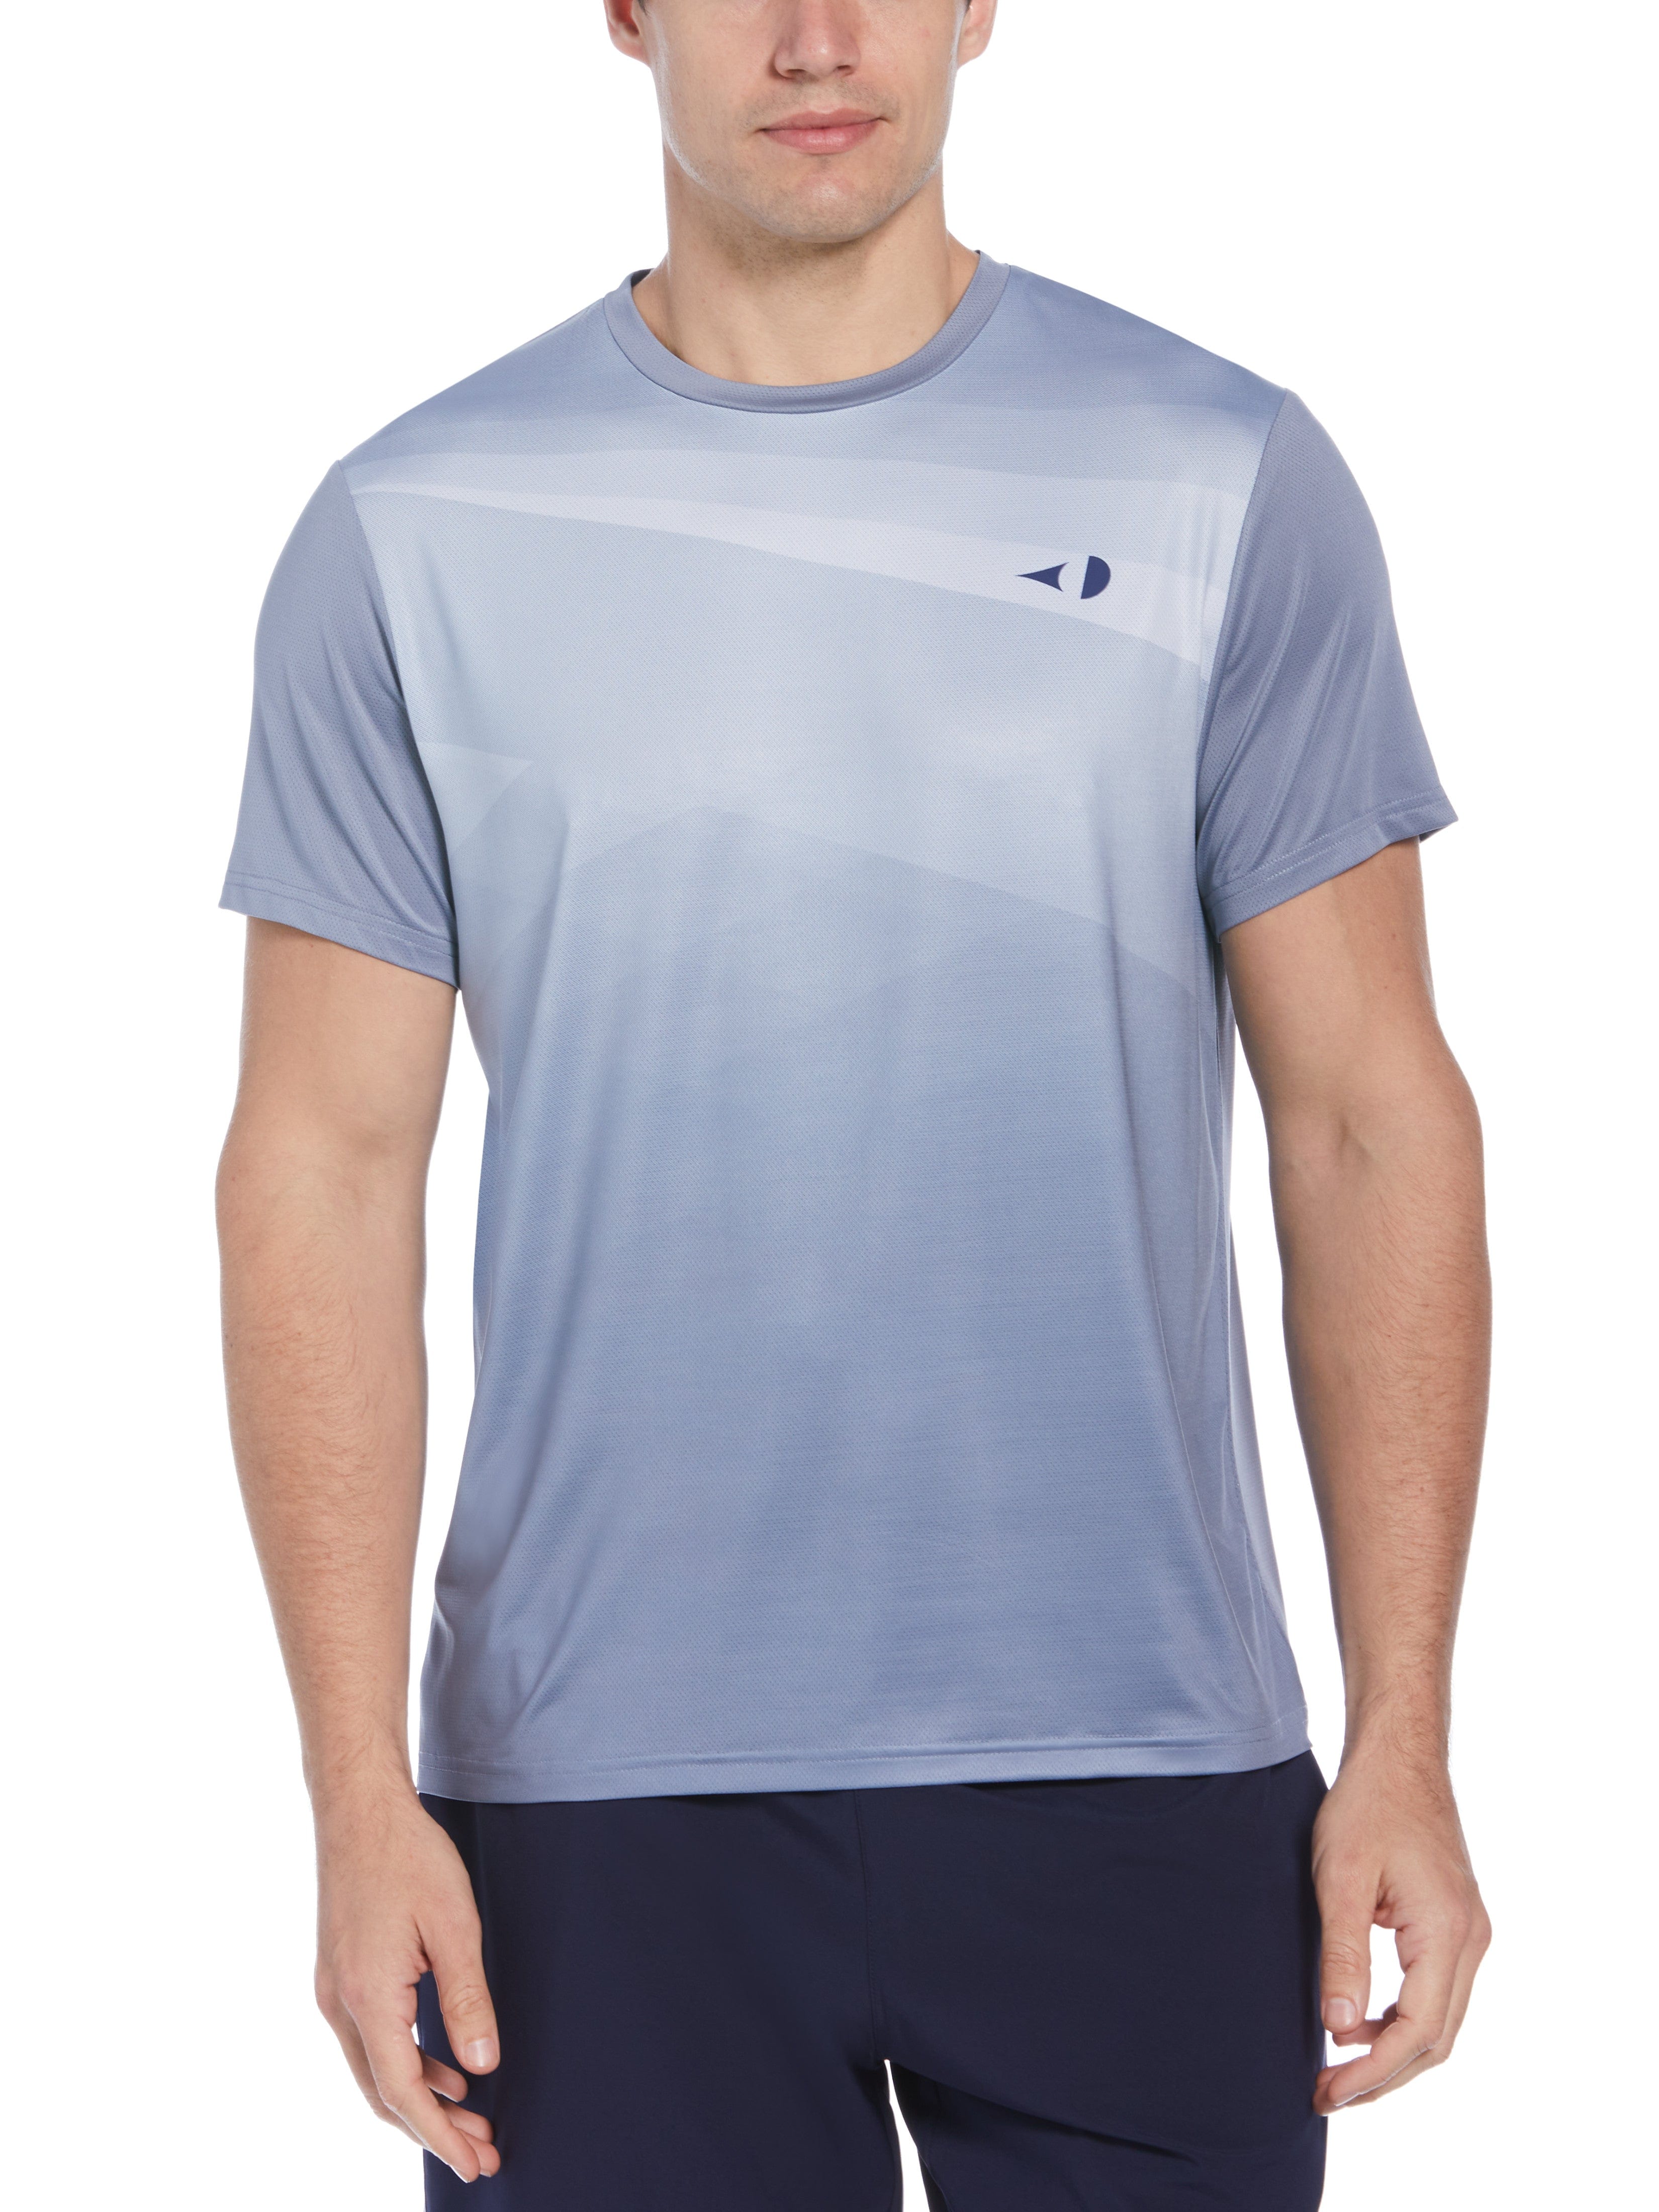 Grand Slam Mens Asymetrical Texture Printed Tennis T-Shirt, Size Large, Flint Stone Gray, Polyester/Spandex | Golf Apparel Shop